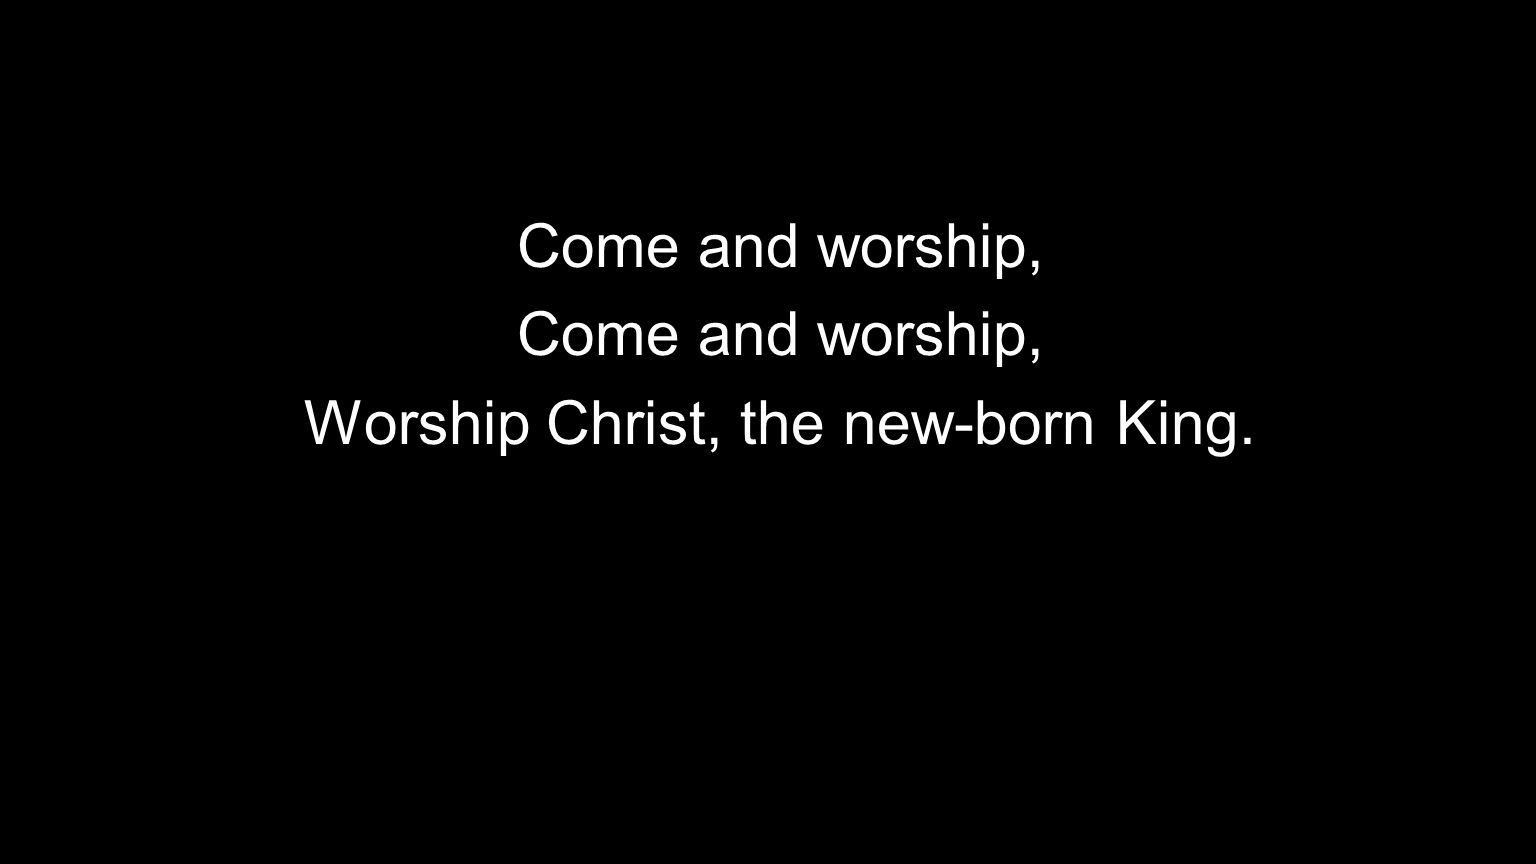 Come and worship, Worship Christ, the new-born King.